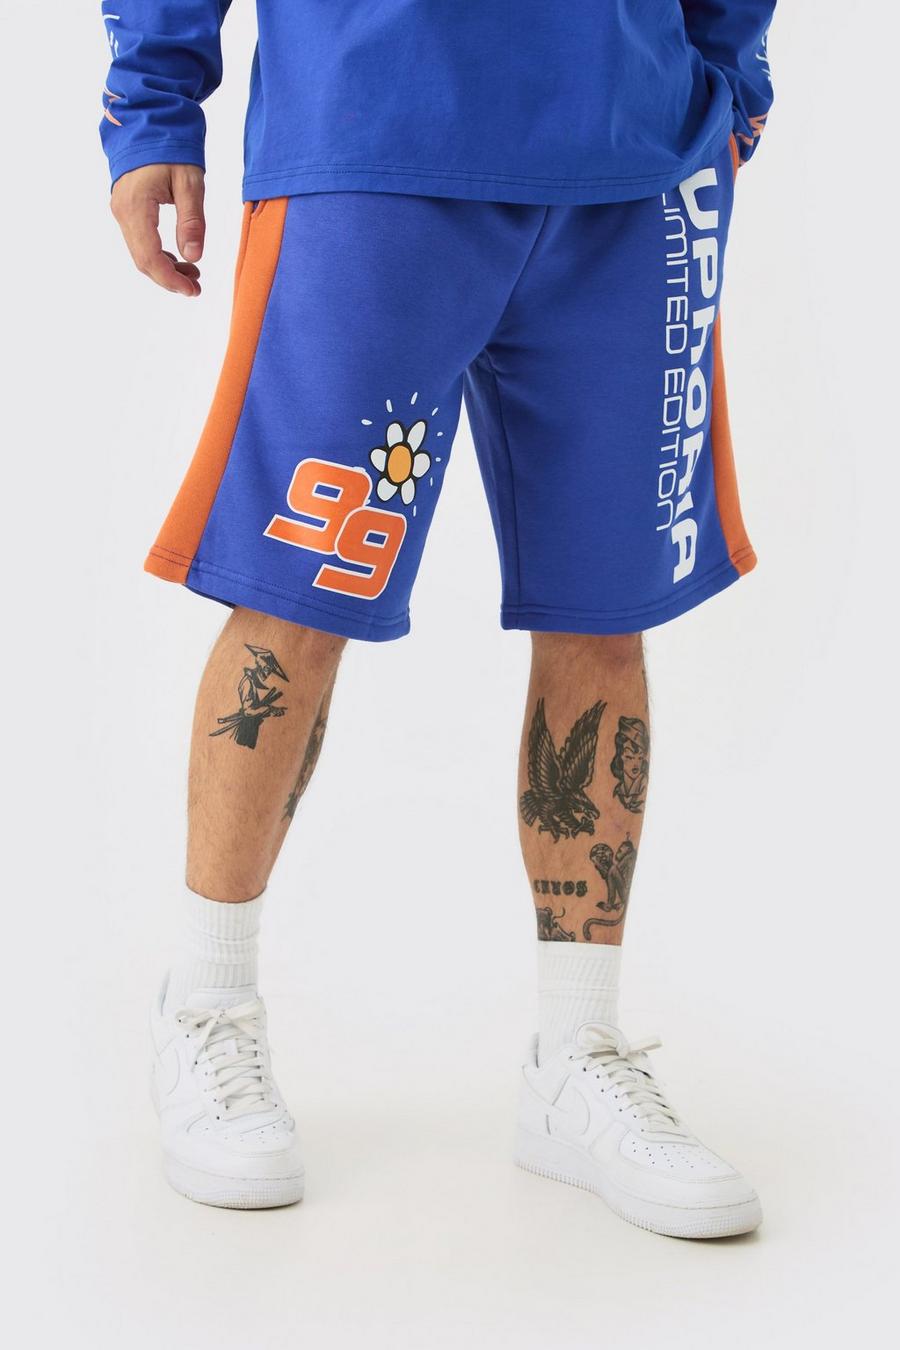 Cobalt Euphoria Graphic Long Length Basketball Shorts